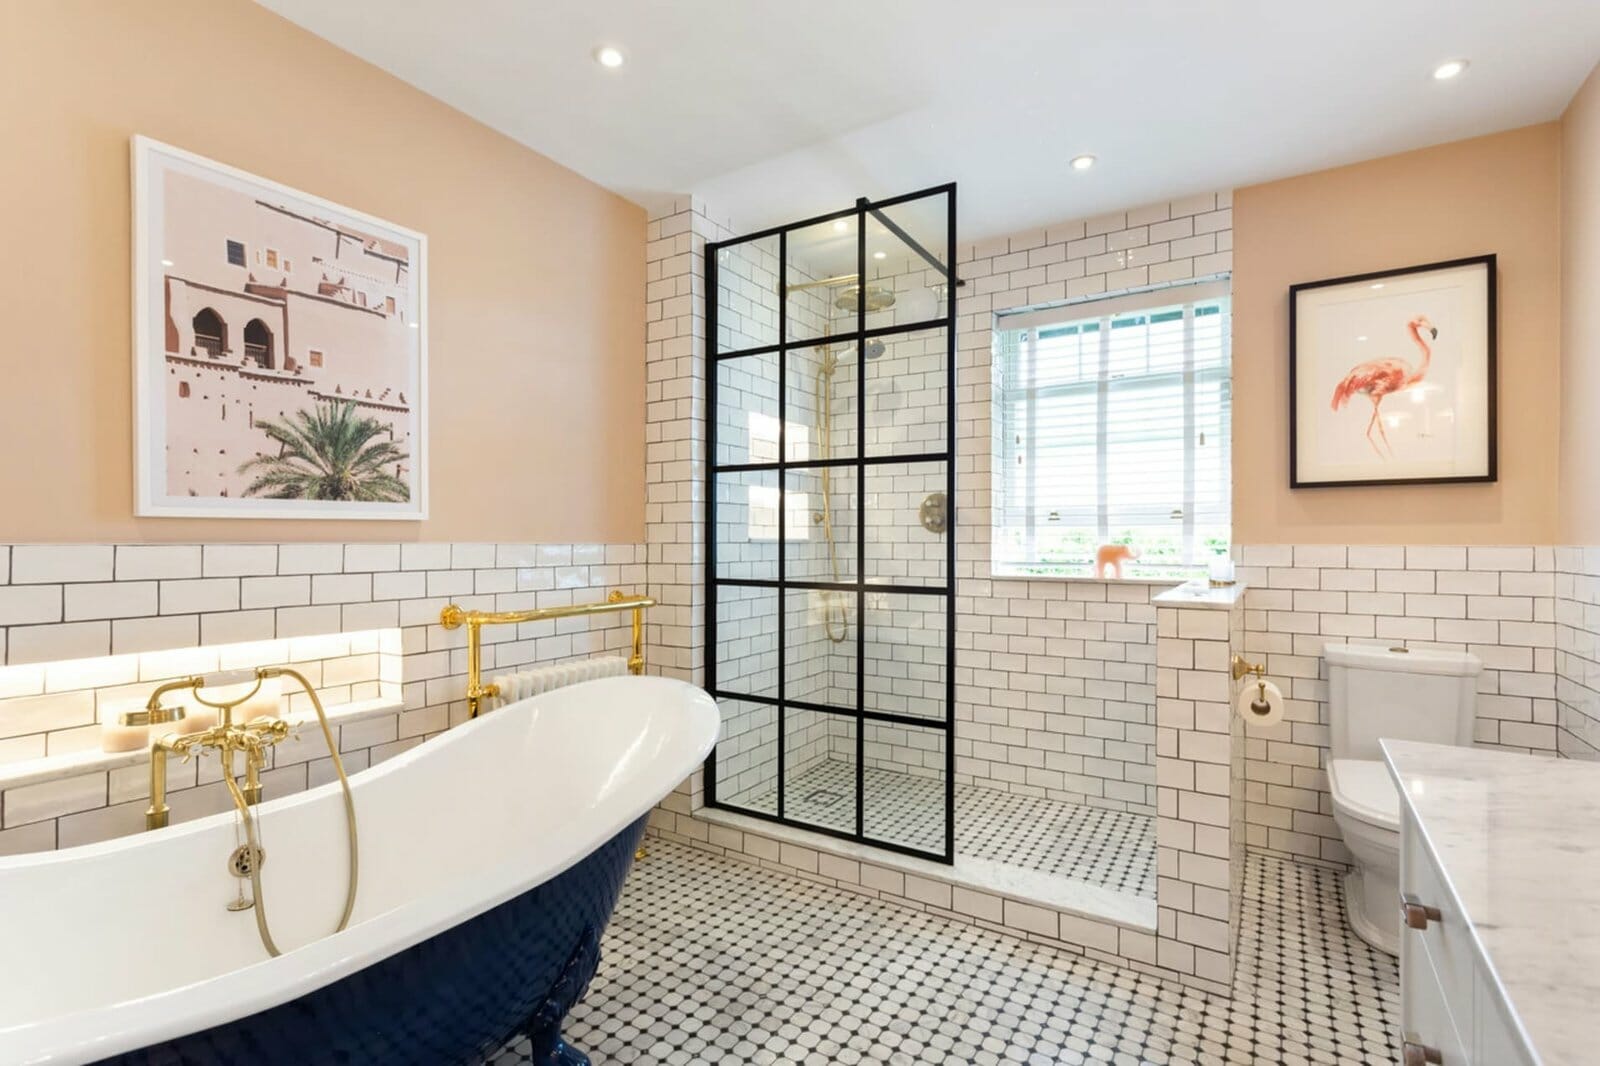 15 Perfect Black Floors for Bathrooms: Best Bathroom Ideas